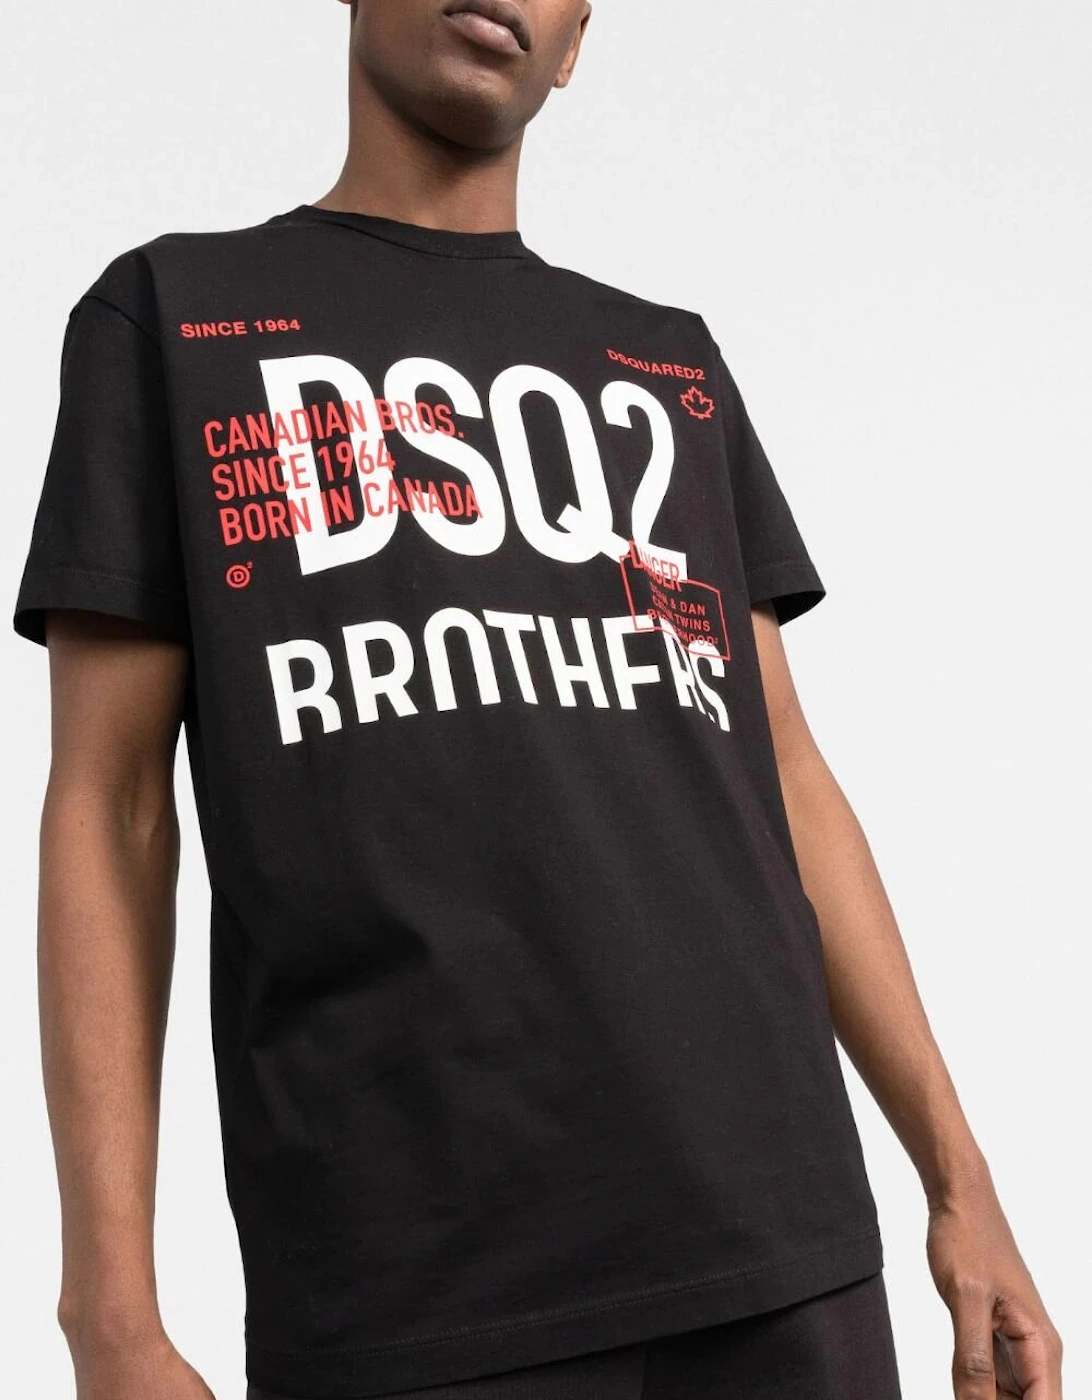 Bro T-shirt in Black